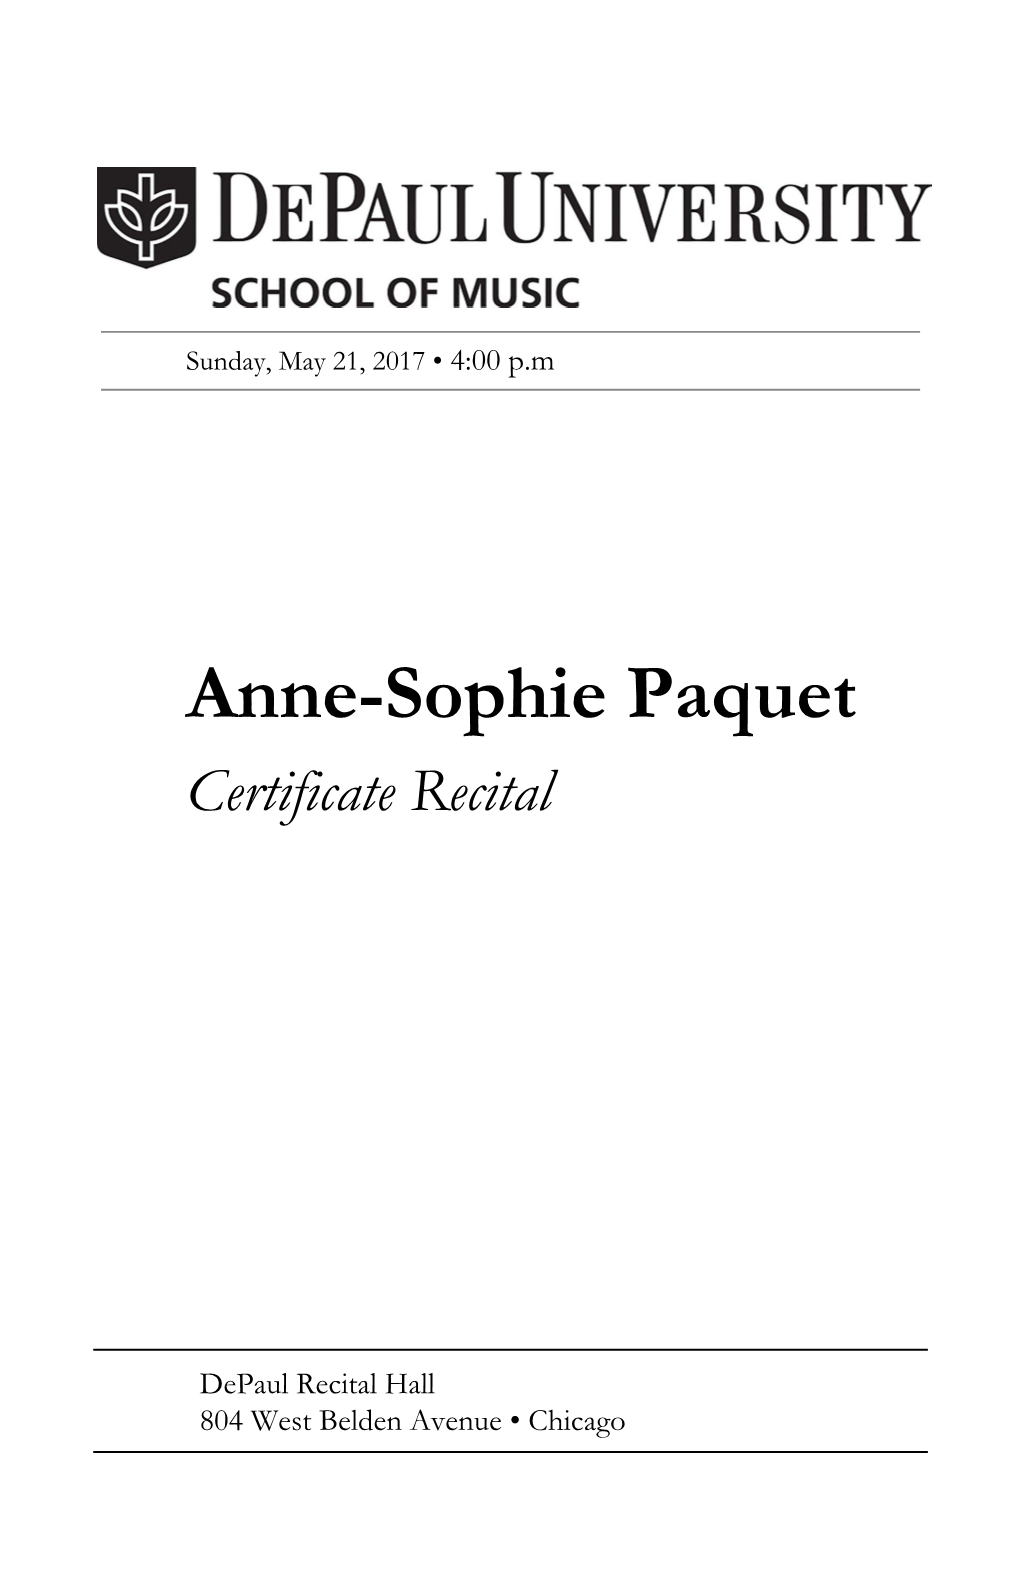 Anne-Sophie Paquet, Violin Certificate Recital Beilin Han, Piano